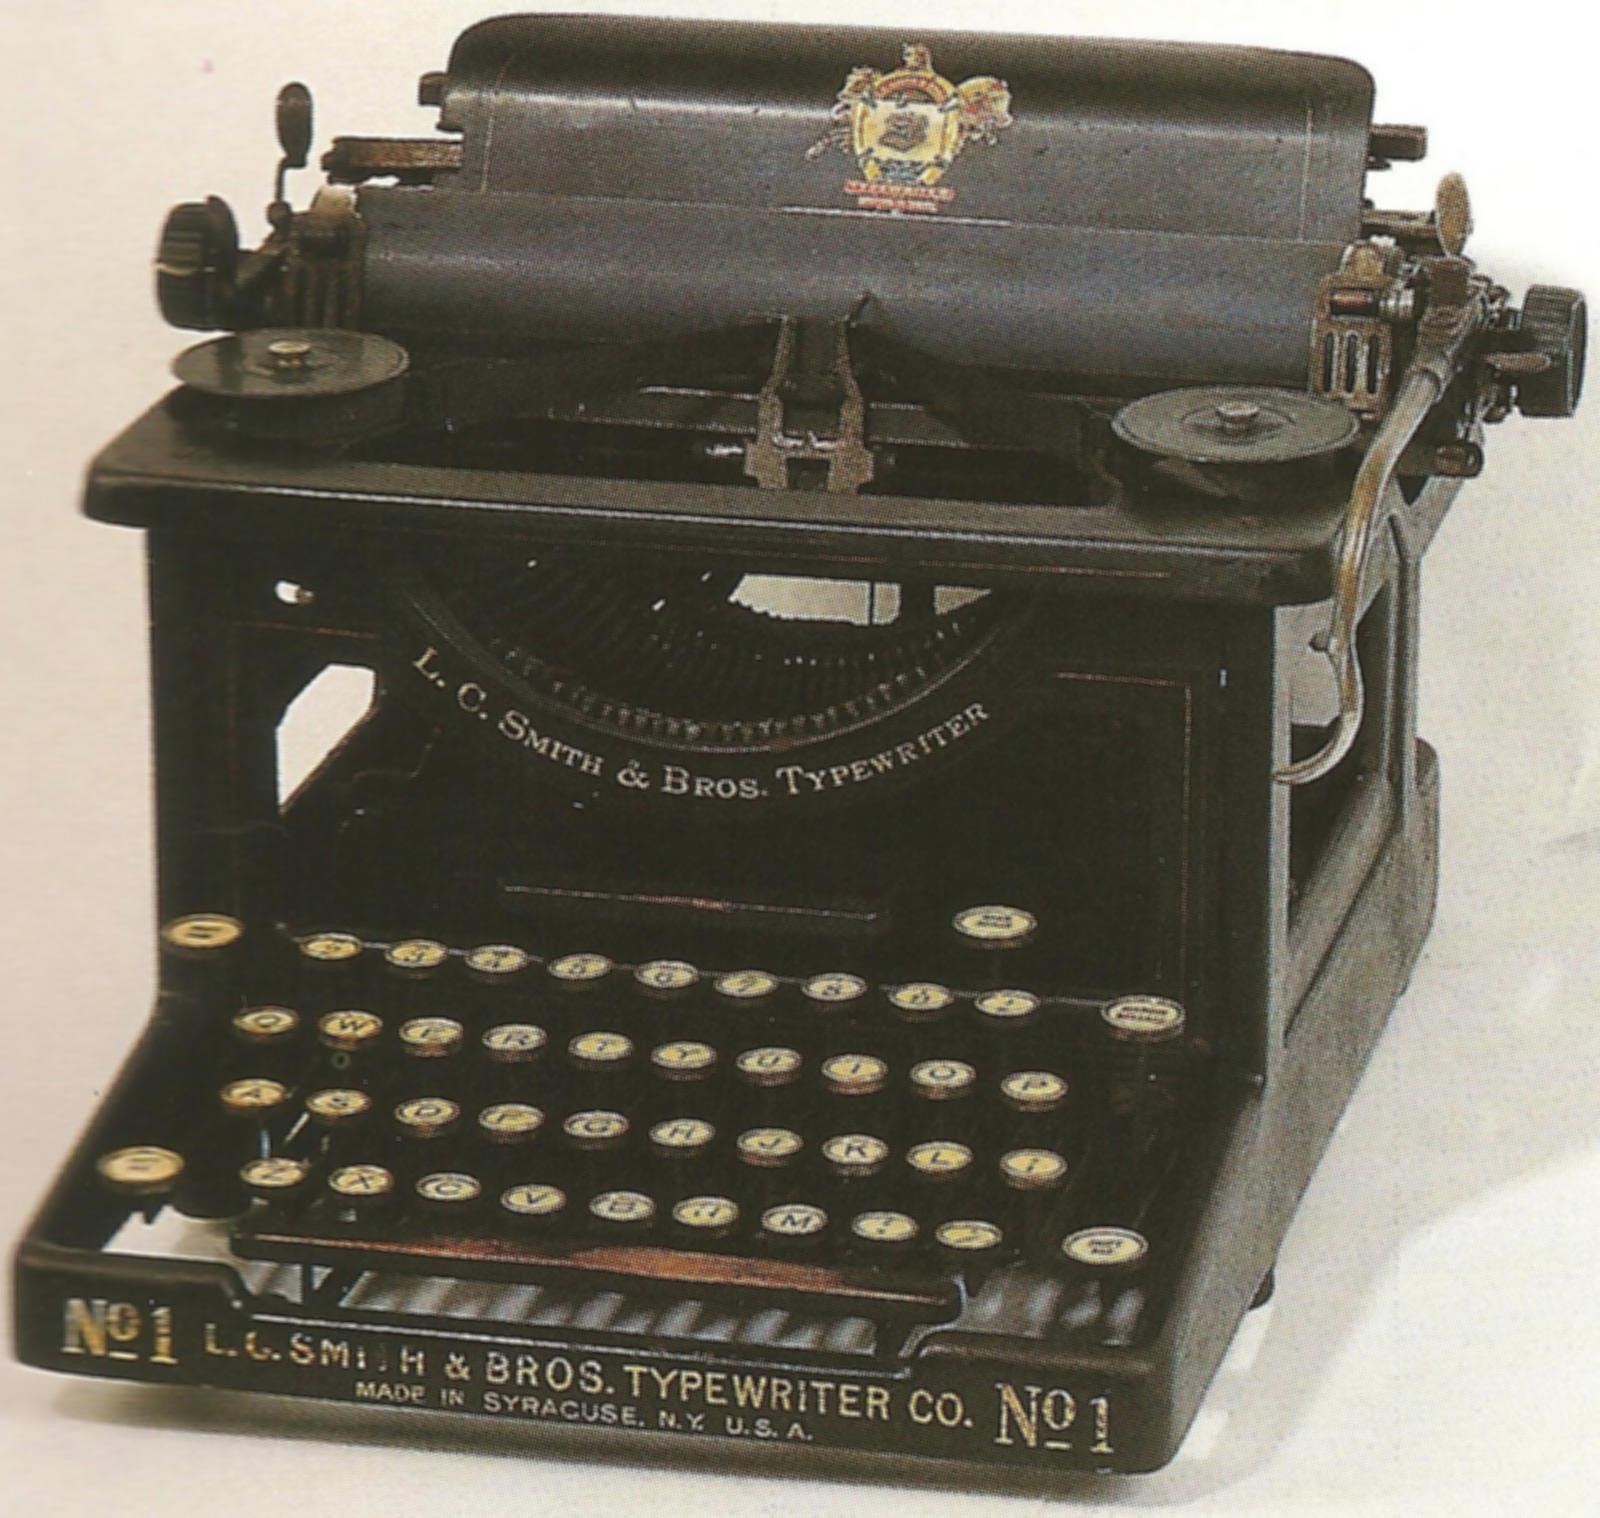 L. C. Smith & Bros. Typewriter No.1